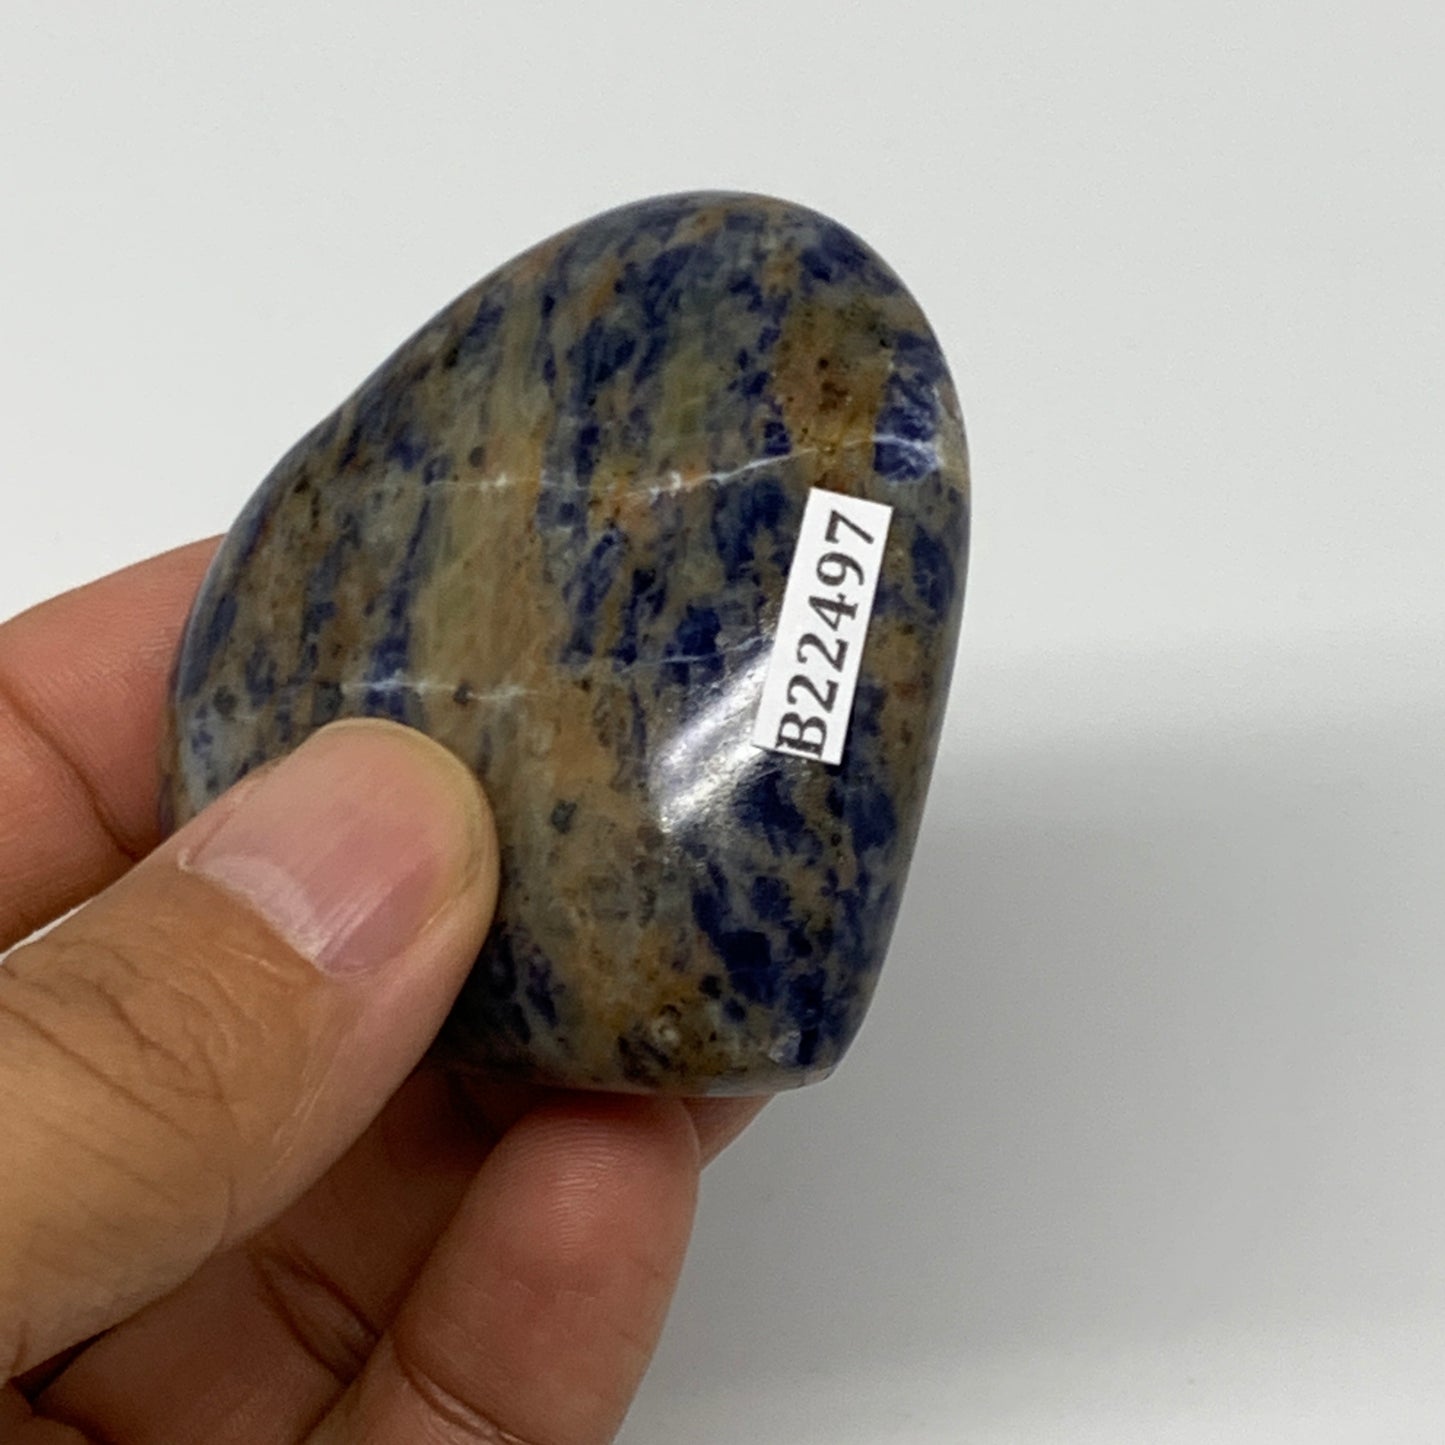 87.3g,2.1"x2.3"x0.8", Natural Sodalite Heart Crystal Gemstone @India, B22497